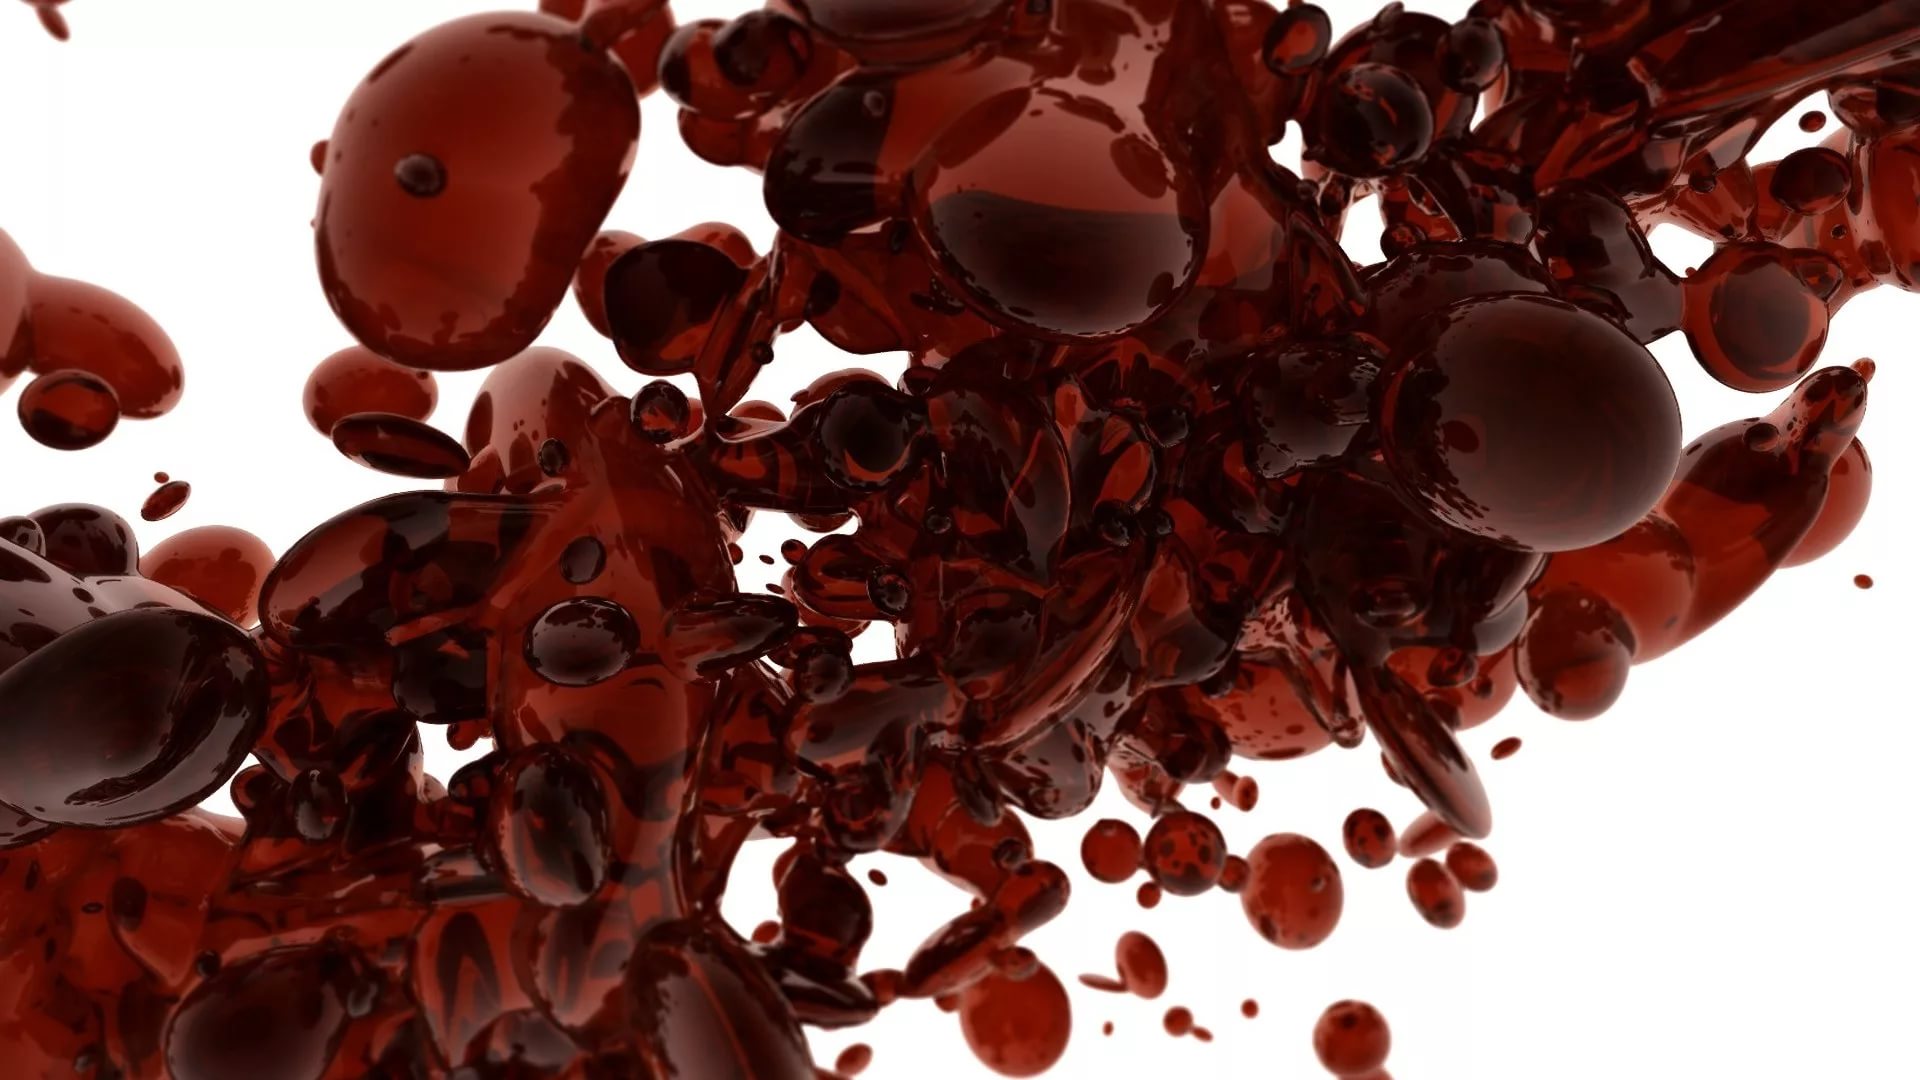 Blood desktop wallpaper